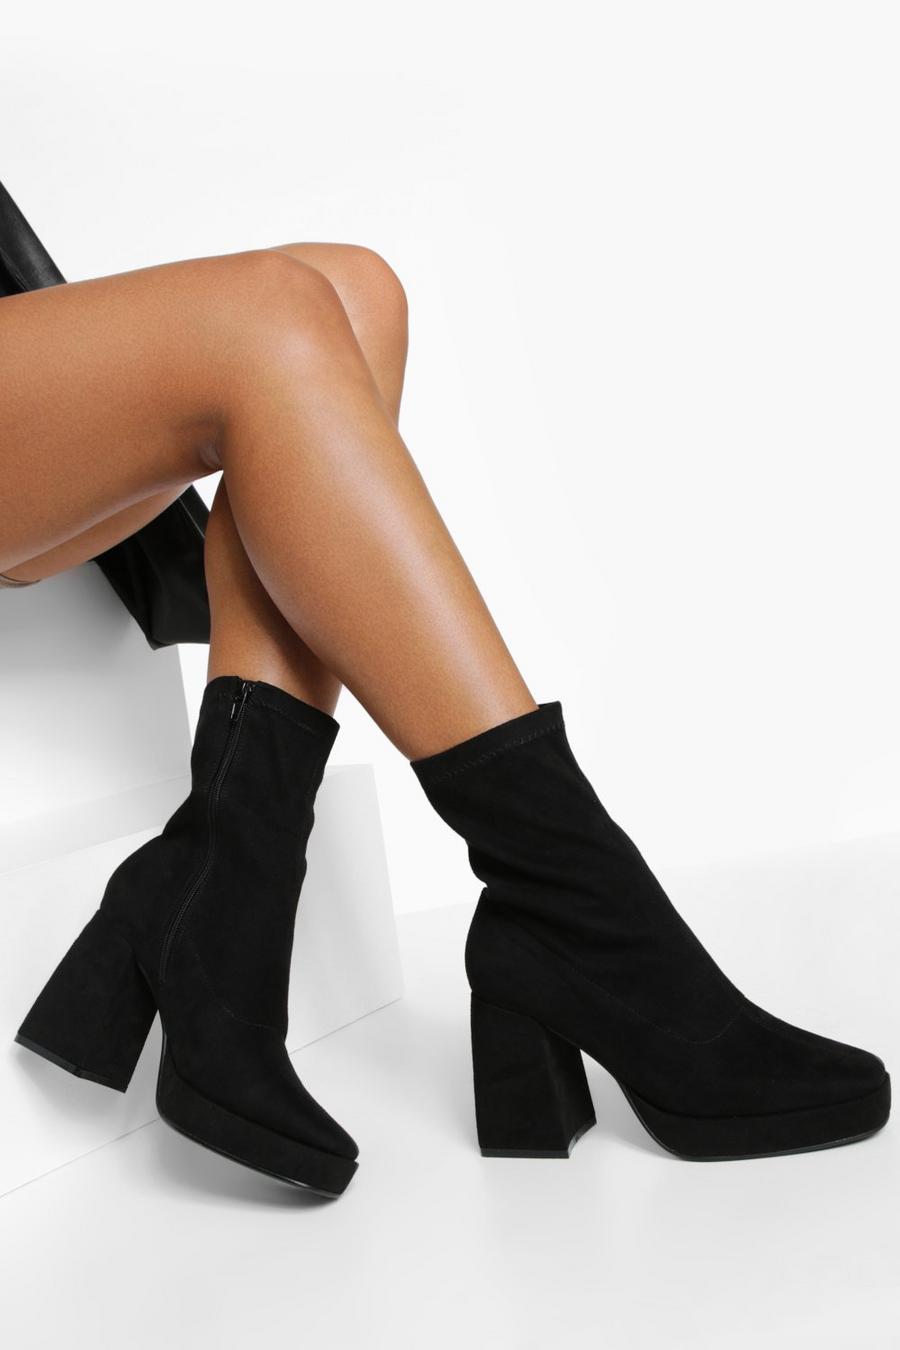 Botas calcetín de holgura ancha con plataforma, Black negro